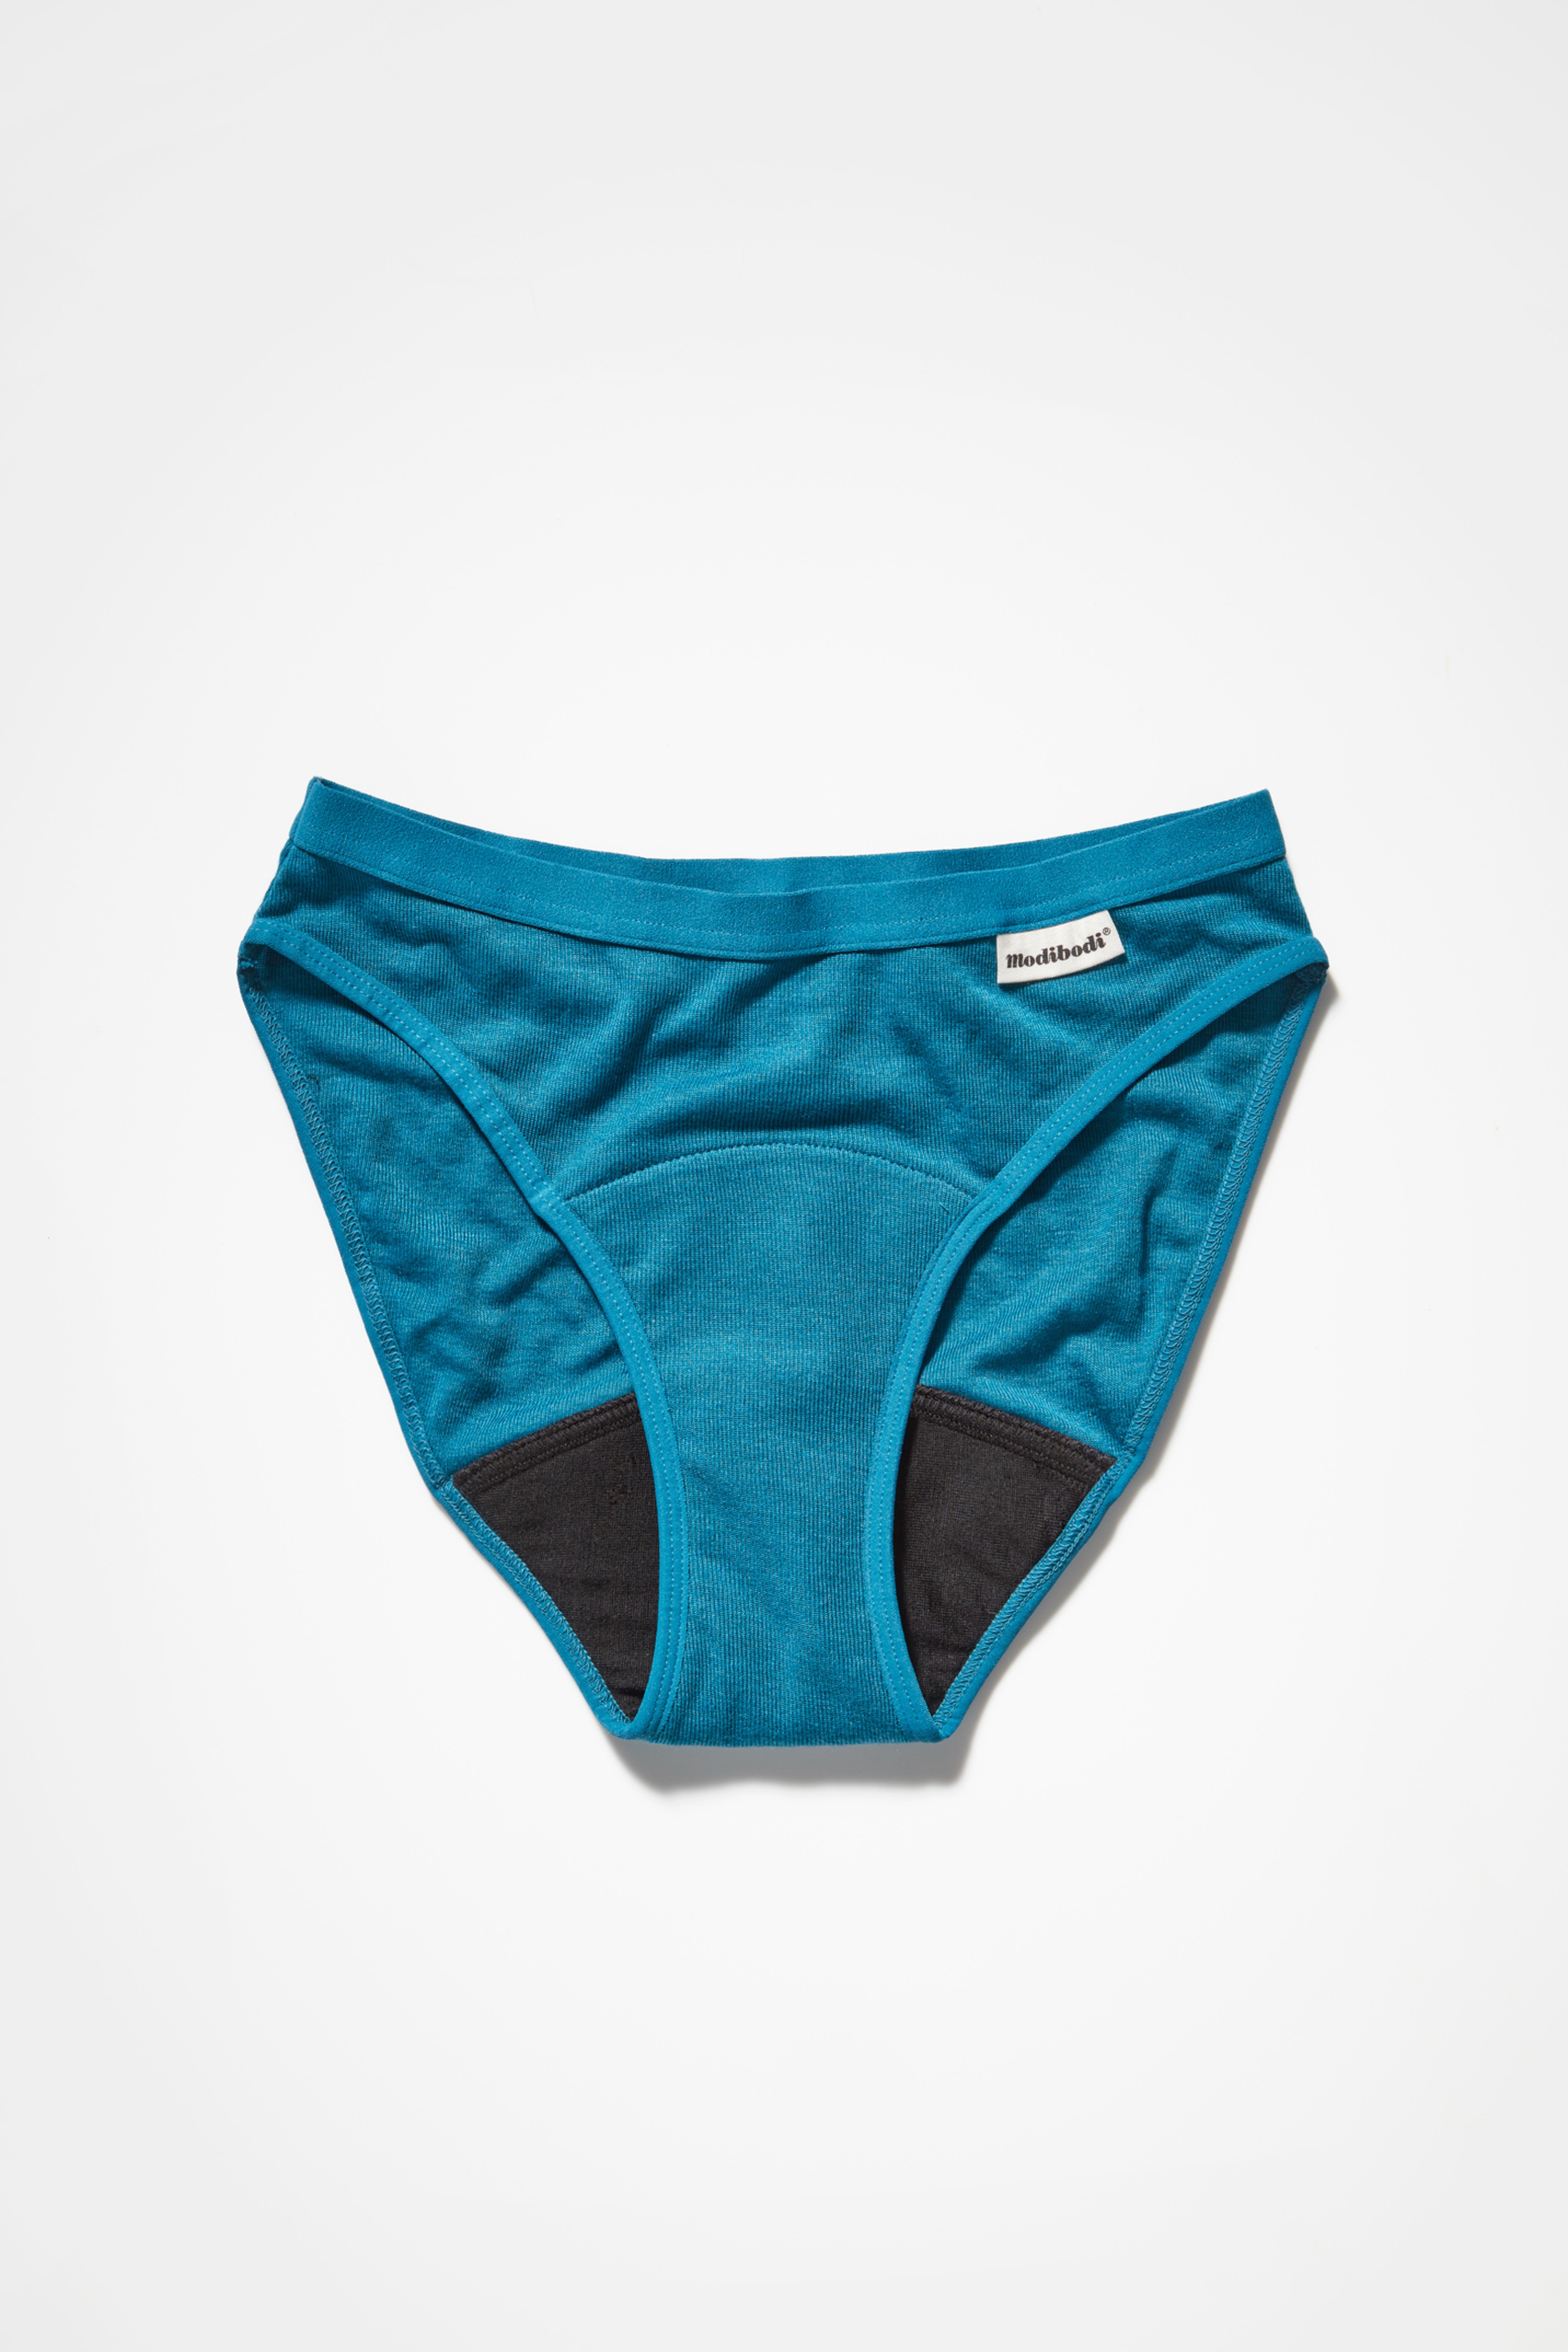 Modibodi: Life-Changing Underwear! – The Tezzy Files